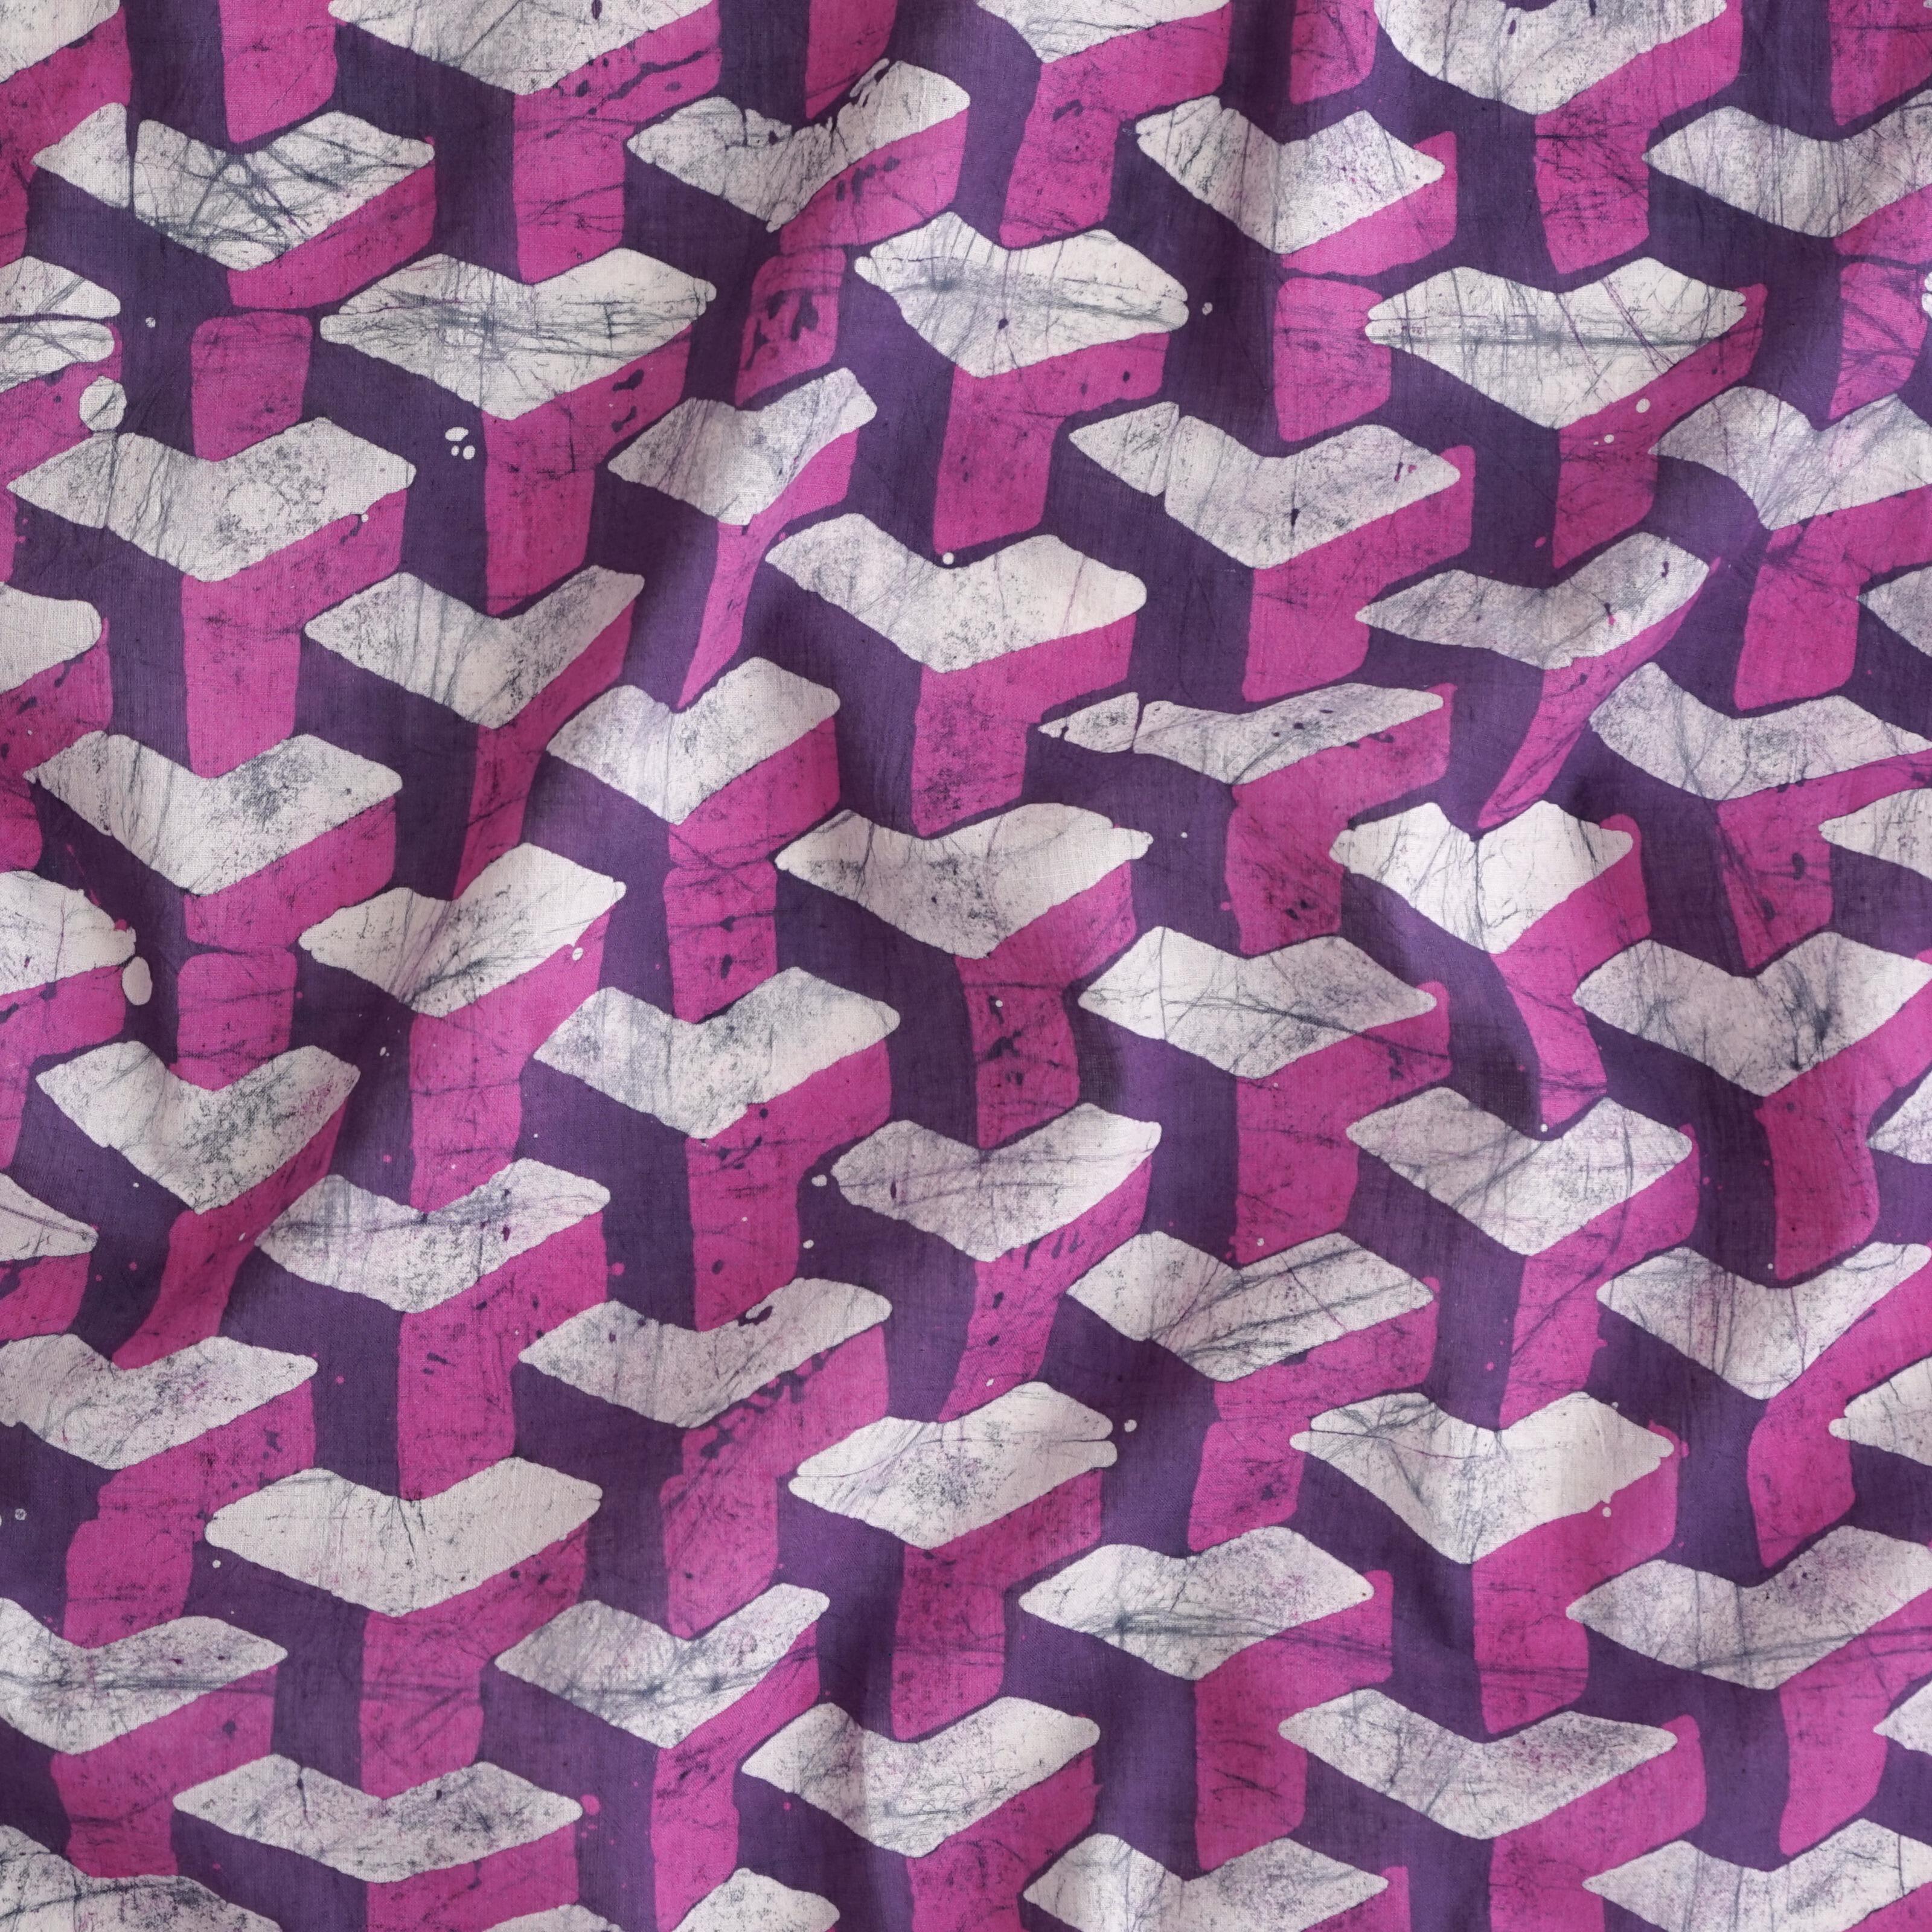 100% Block-Printed Batik Cotton Fabric From India - Purple Building Blocks Motif - Contrast